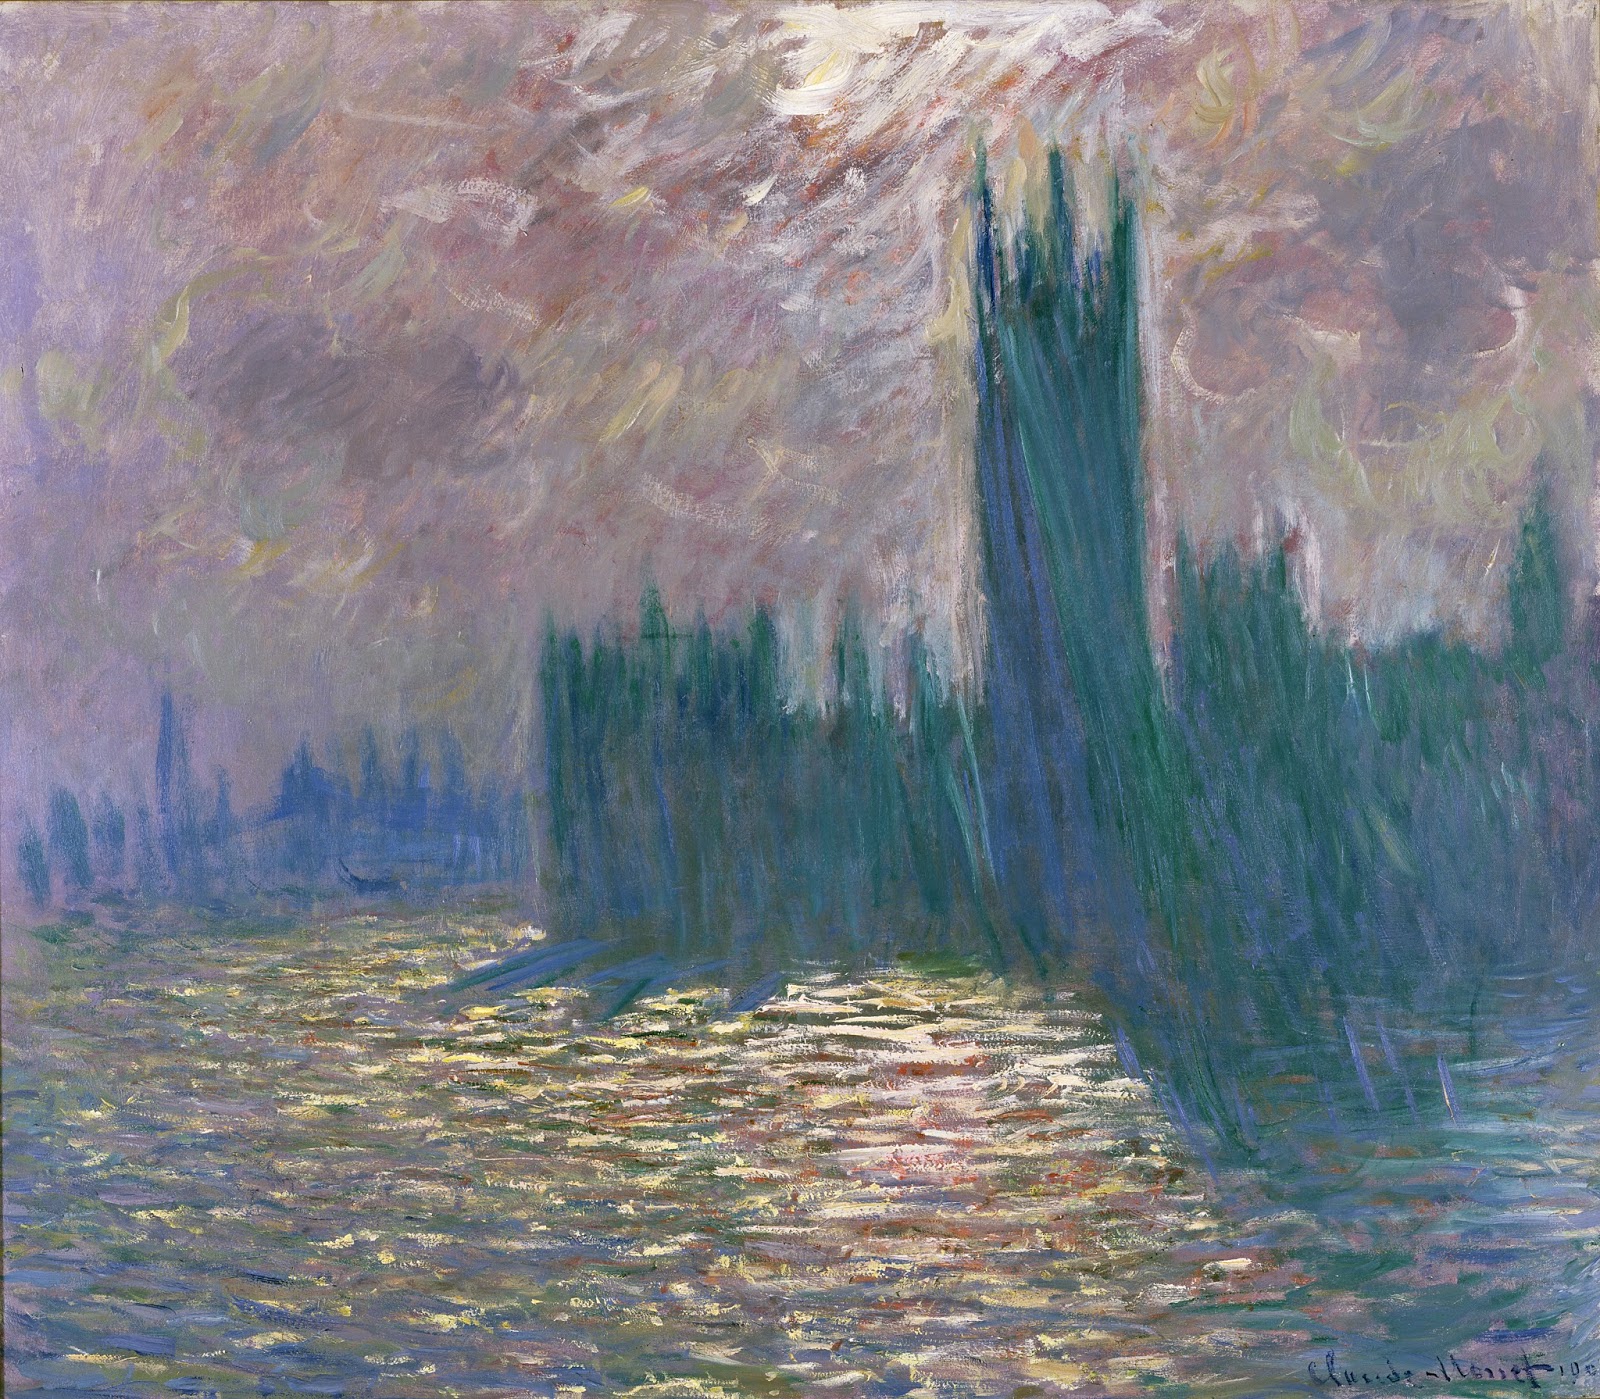 Claude+Monet-1840-1926 (308).jpg